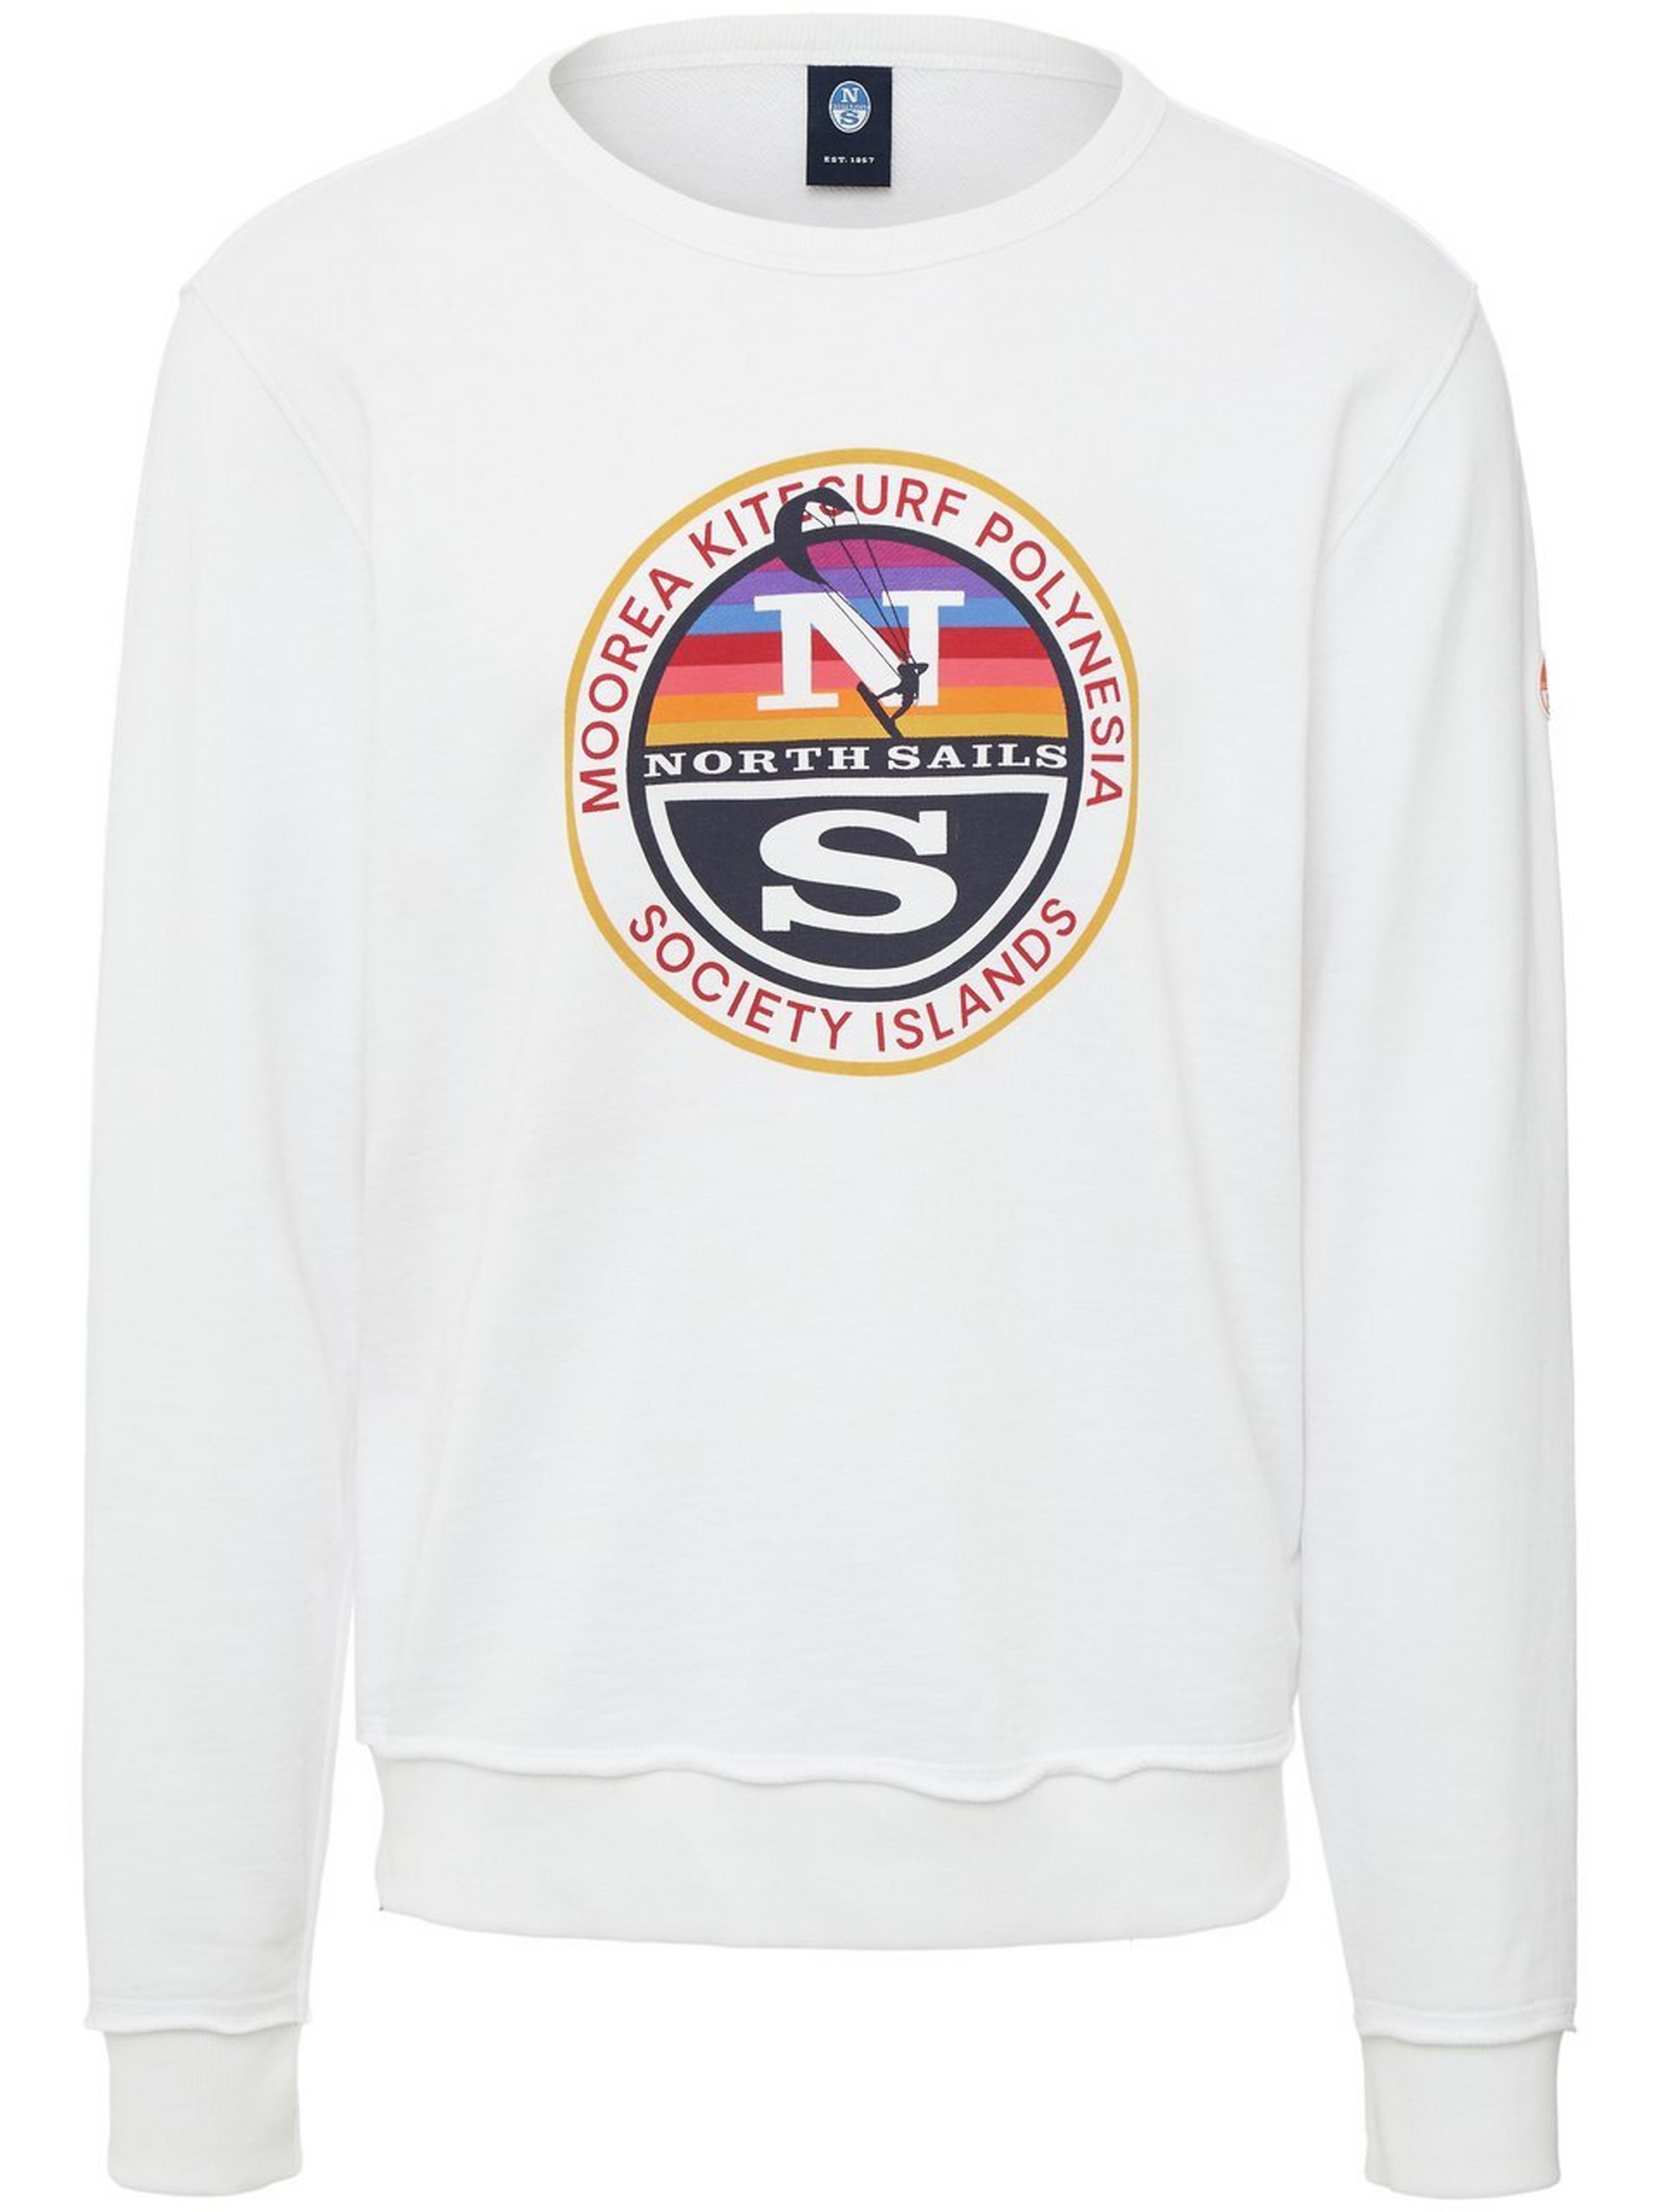 Le sweatshirt 100% coton  North Sails blanc